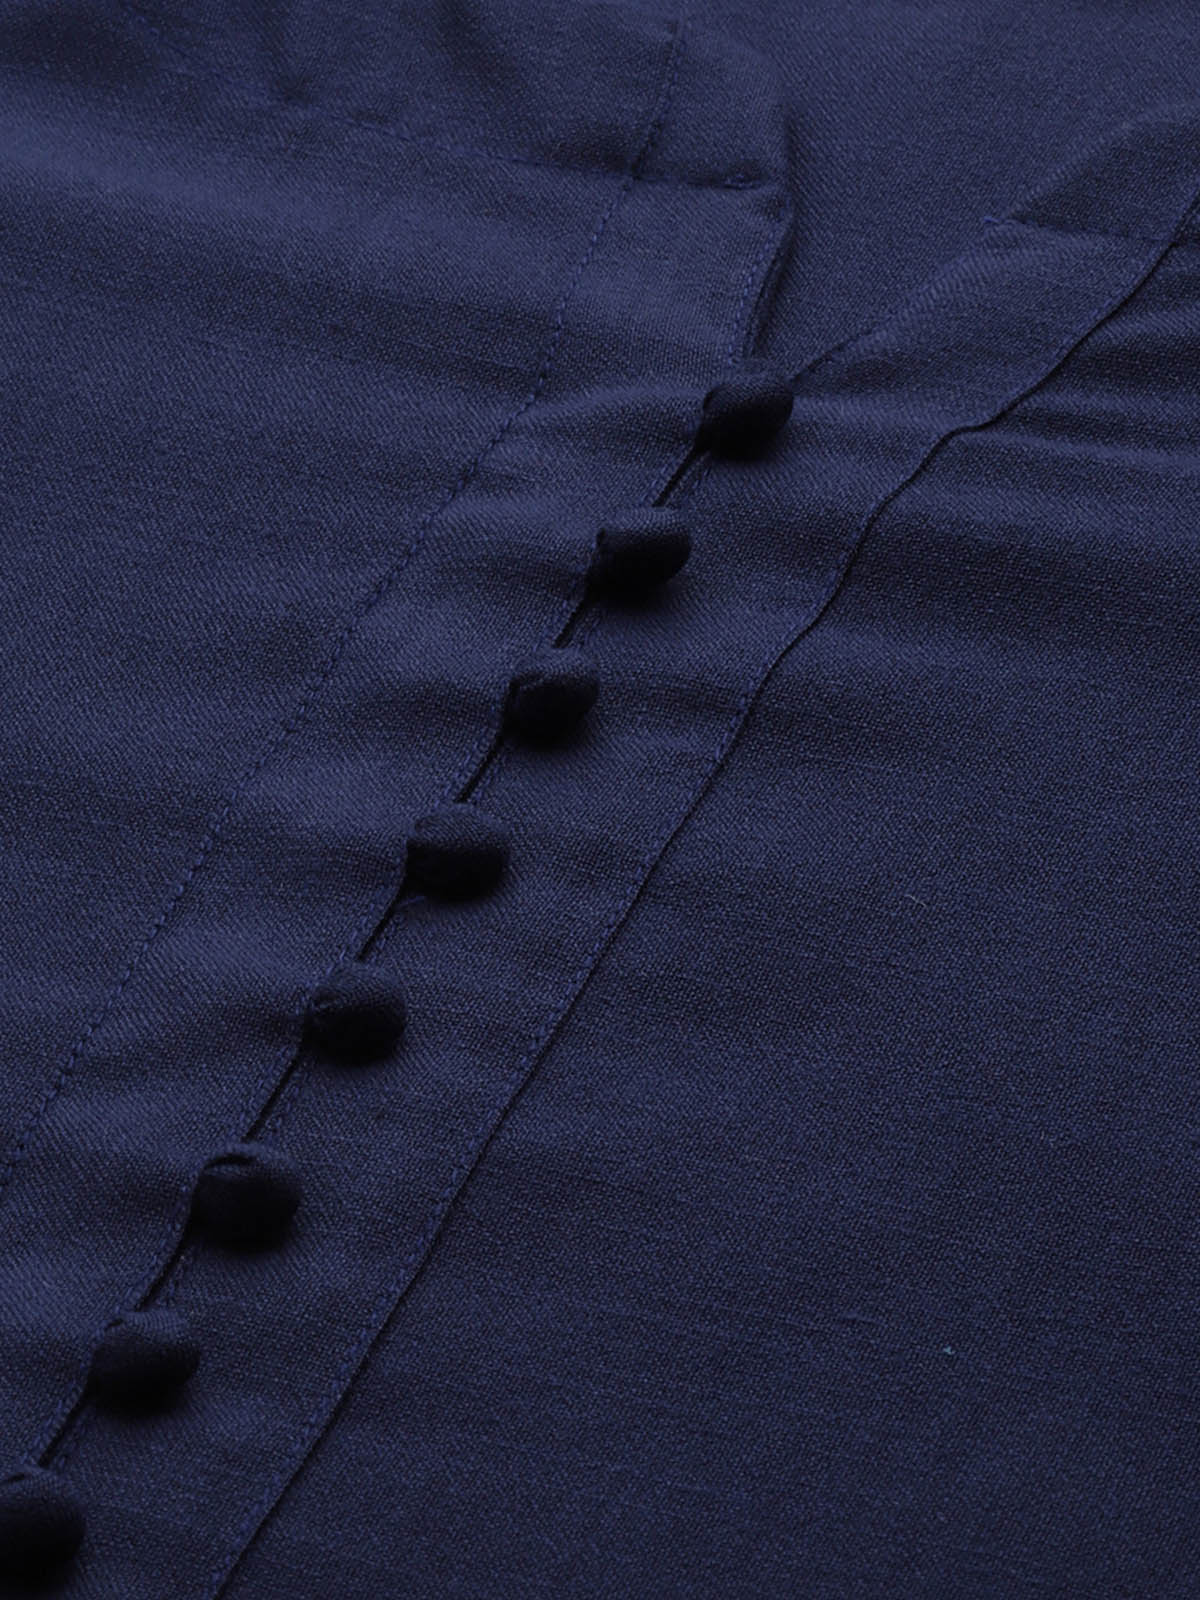 Odette Women Dark Blue Straight Stitched Kurta Palazzo Dupatta Set